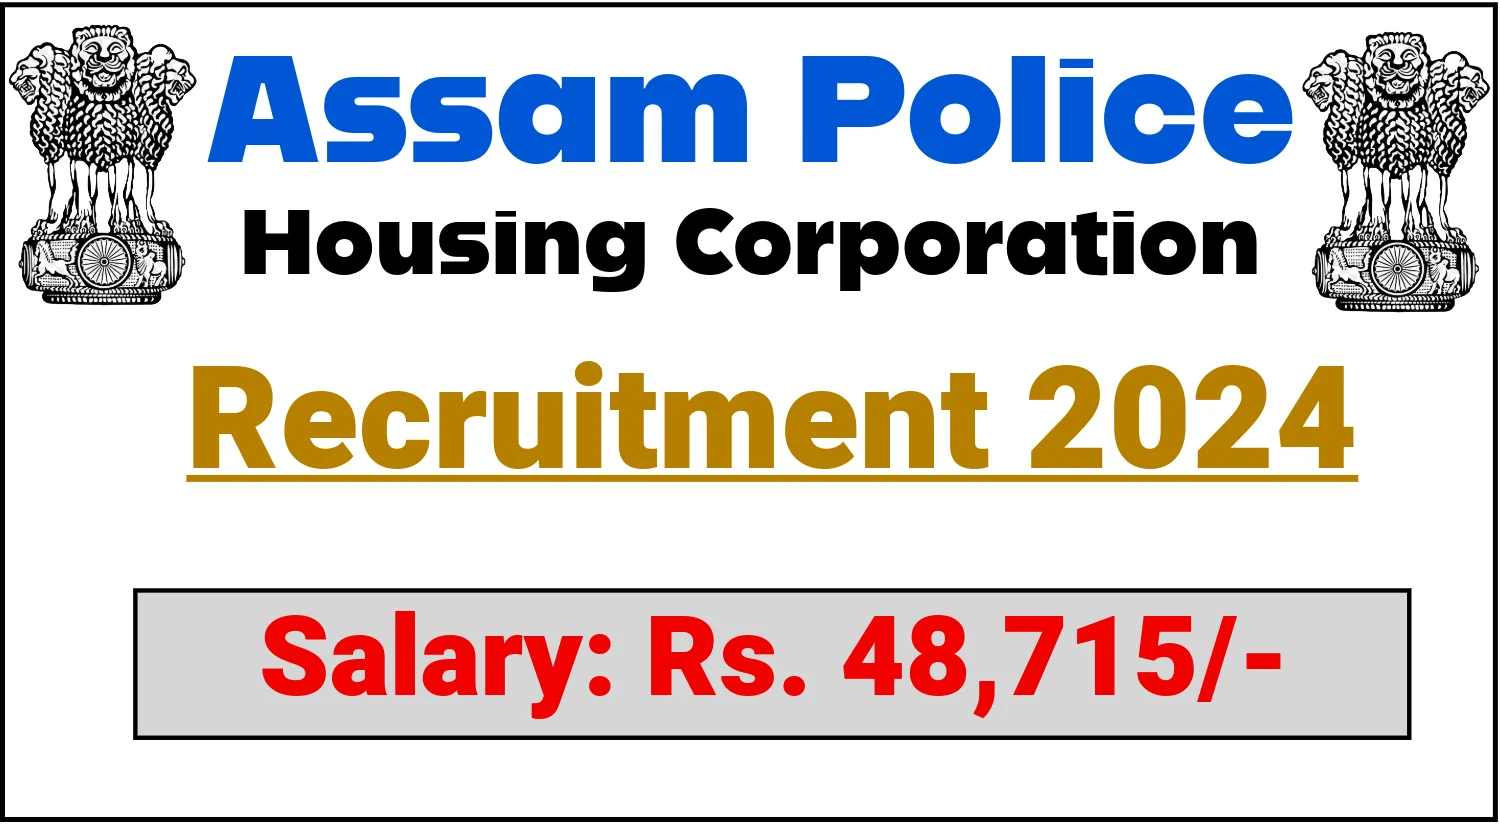 Assam Police Housing Corporation Recruitment 2024